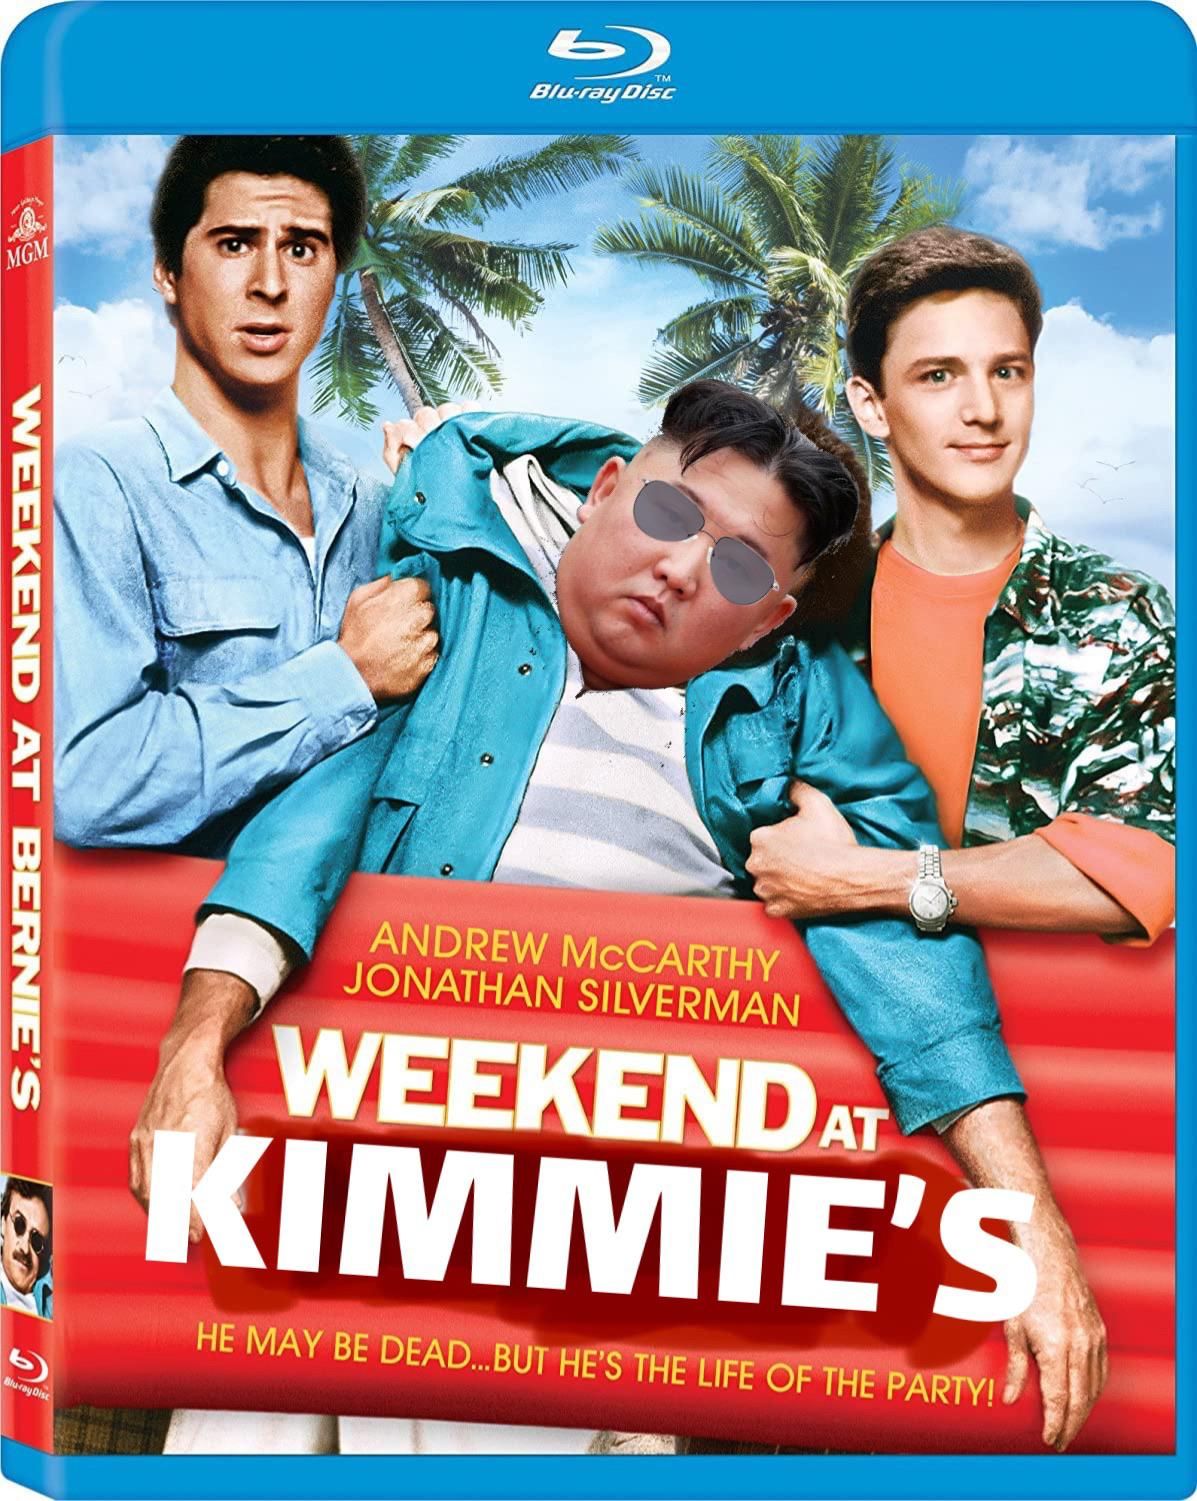 An homage. I heard Kim was a fan of the Weekend at Bernies films.